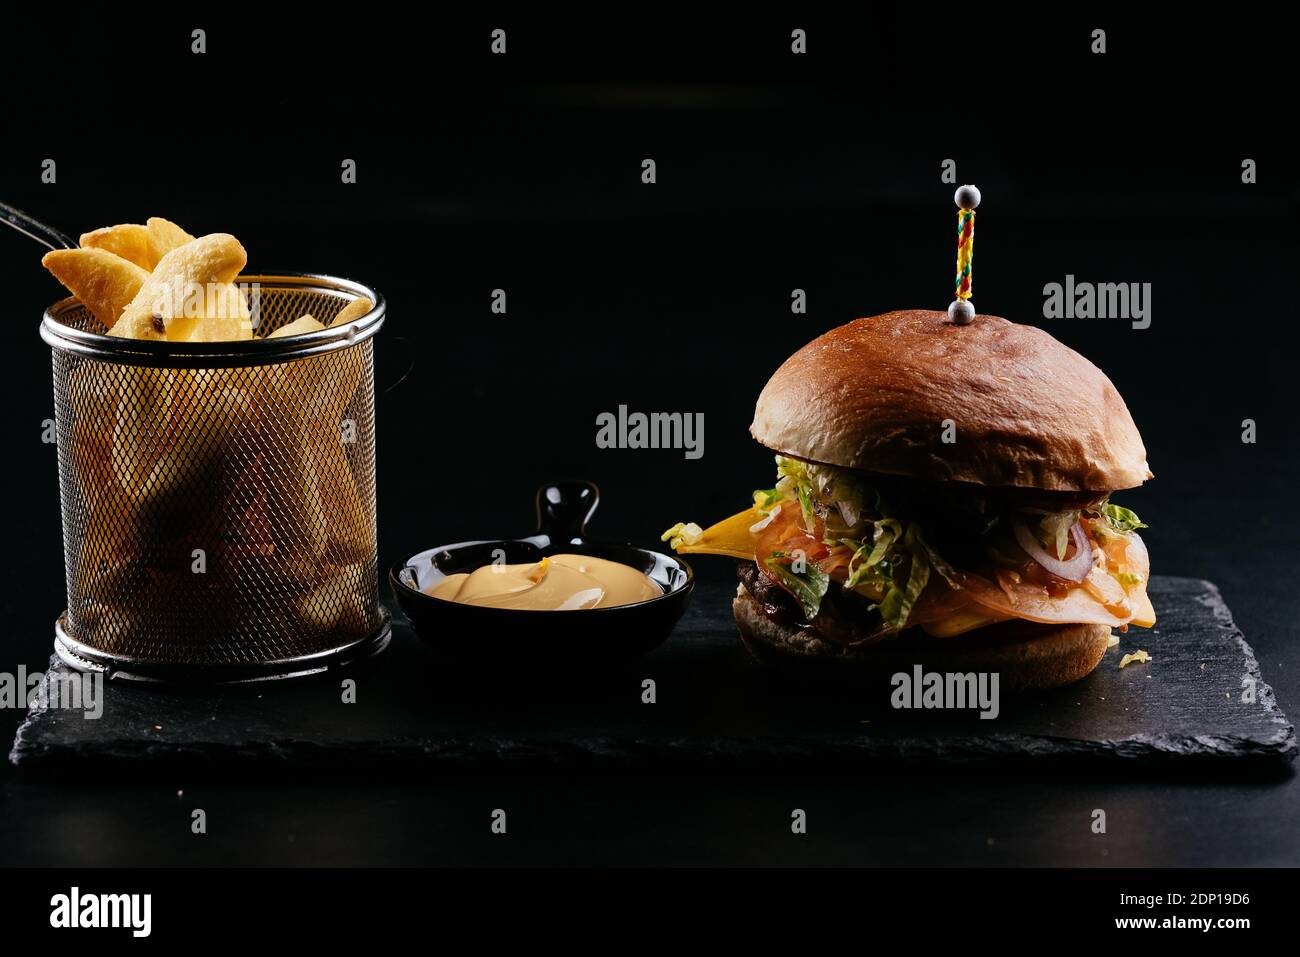 Burger, potatoes, sauce on a black background Stock Photo